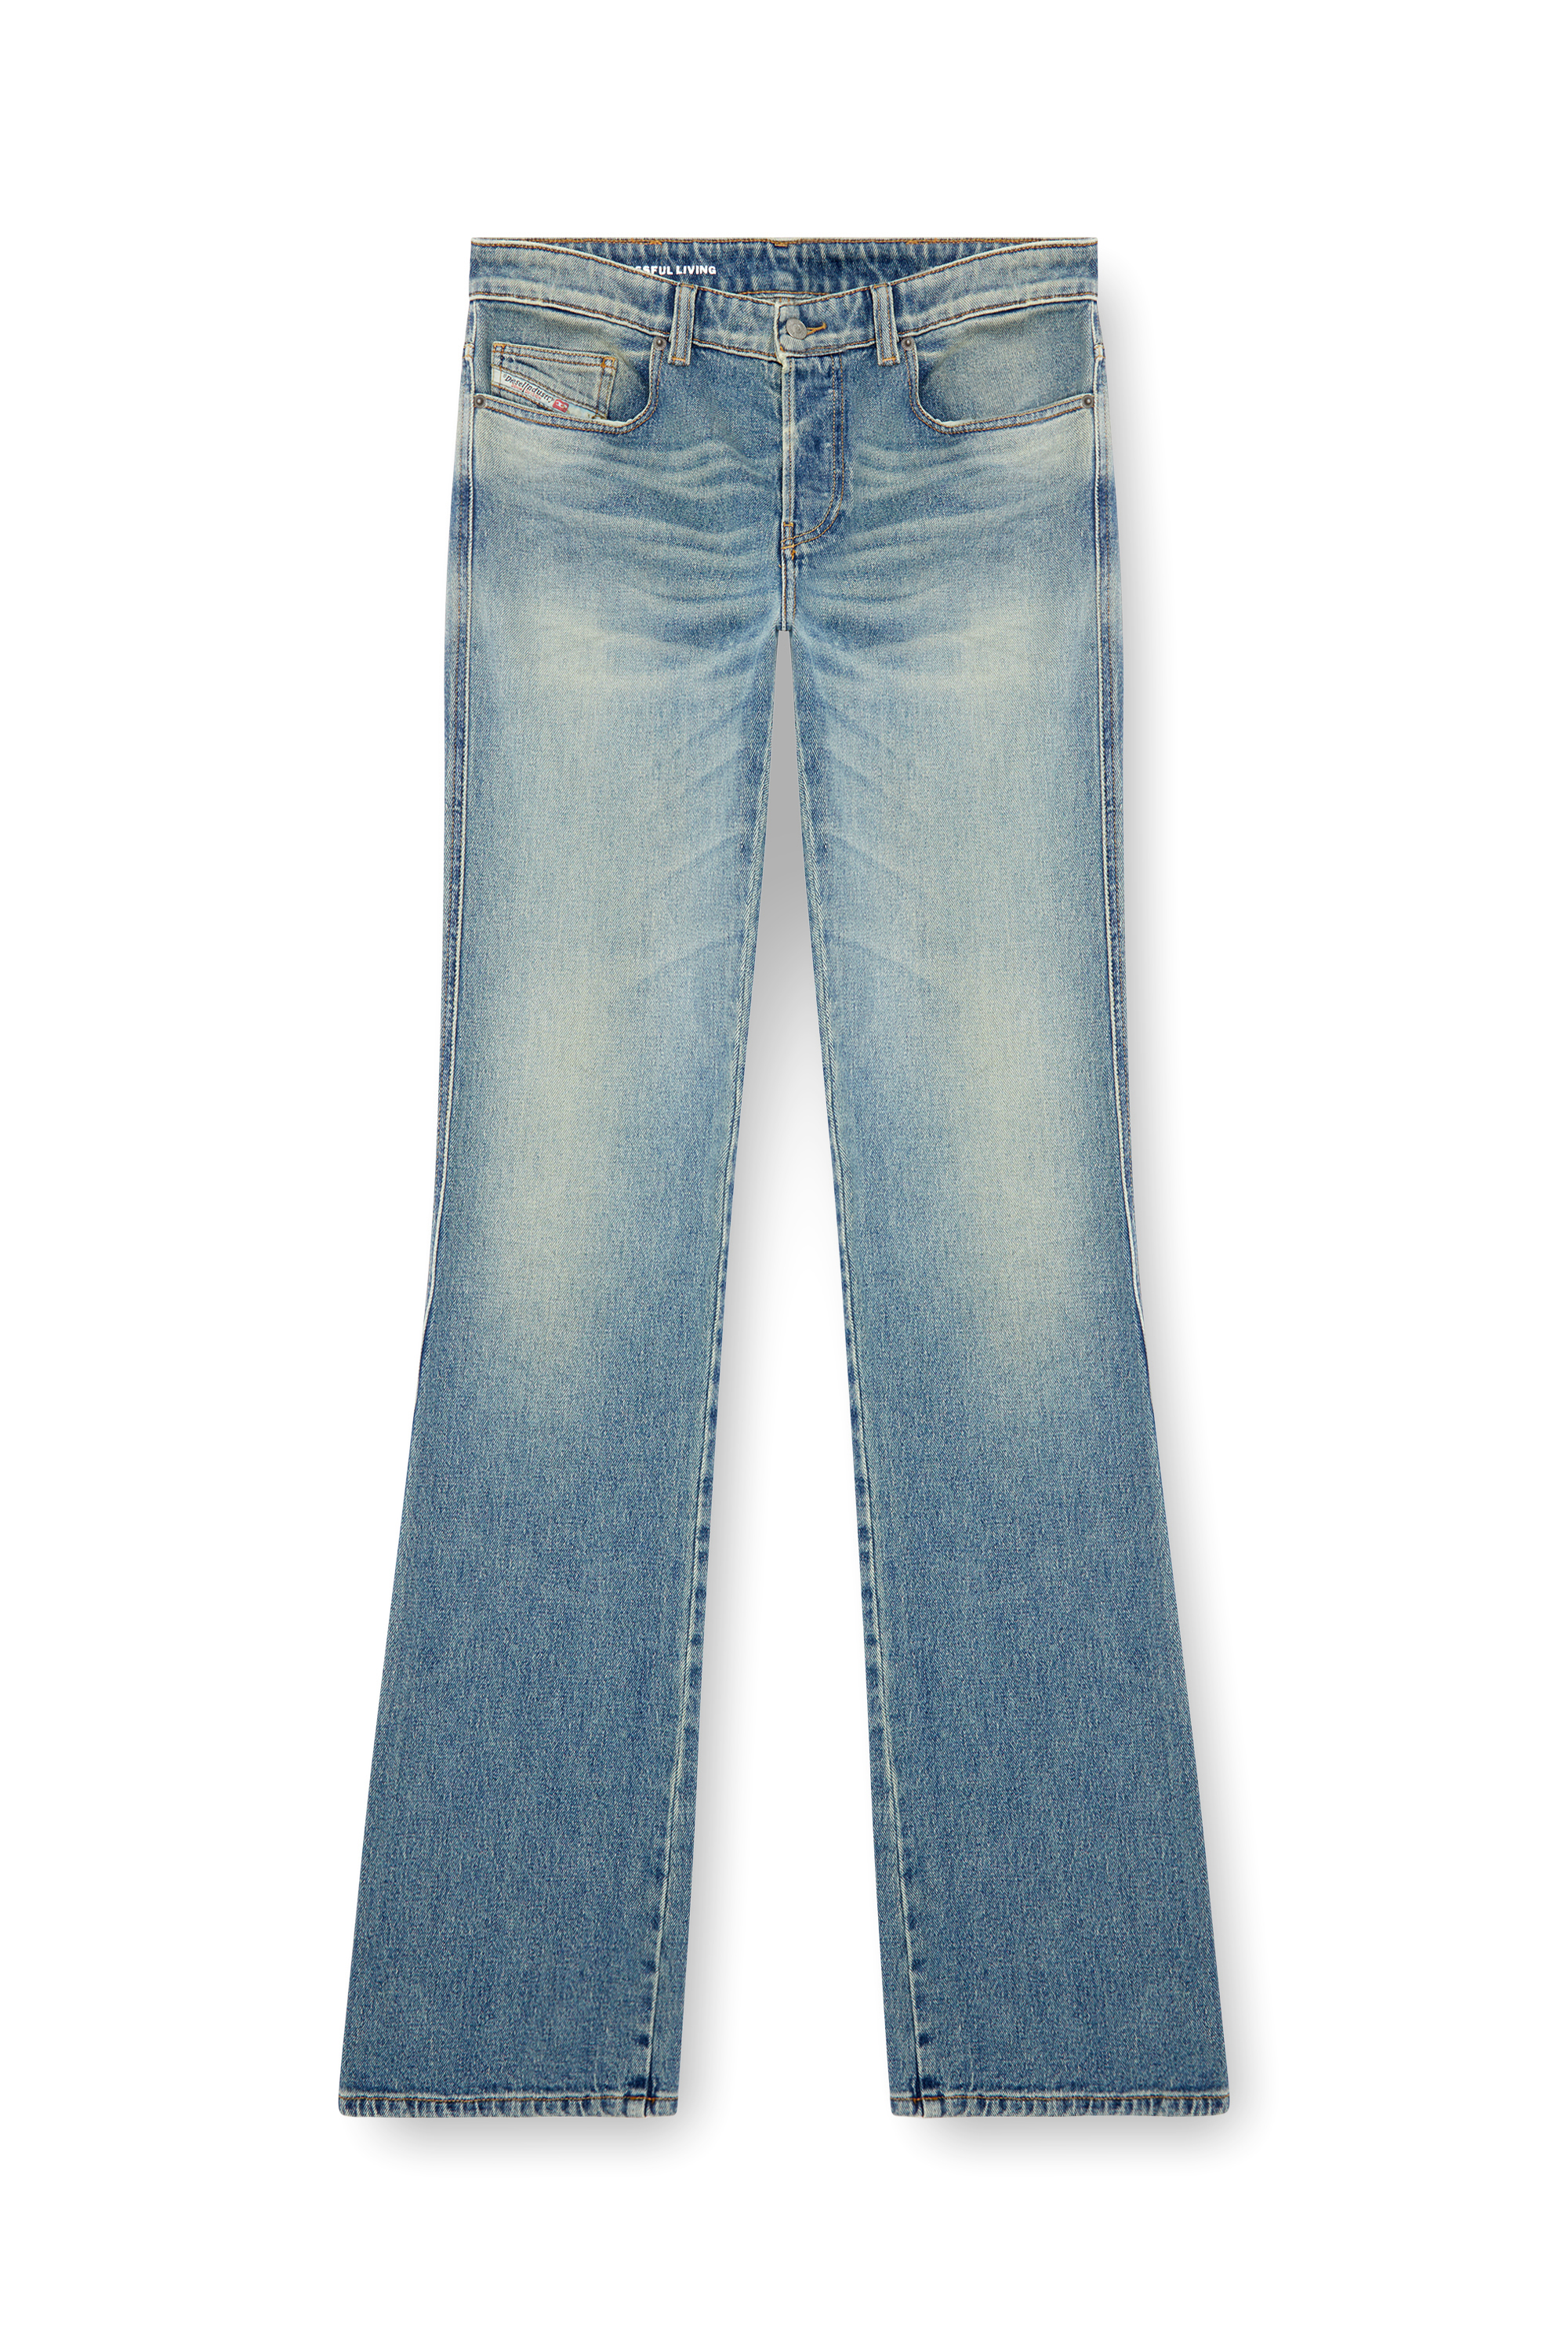 Diesel - Bootcut Jeans 1998 D-Buck 09J55, Hombre Bootcut Jeans - 1998 D-Buck in Azul marino - Image 5